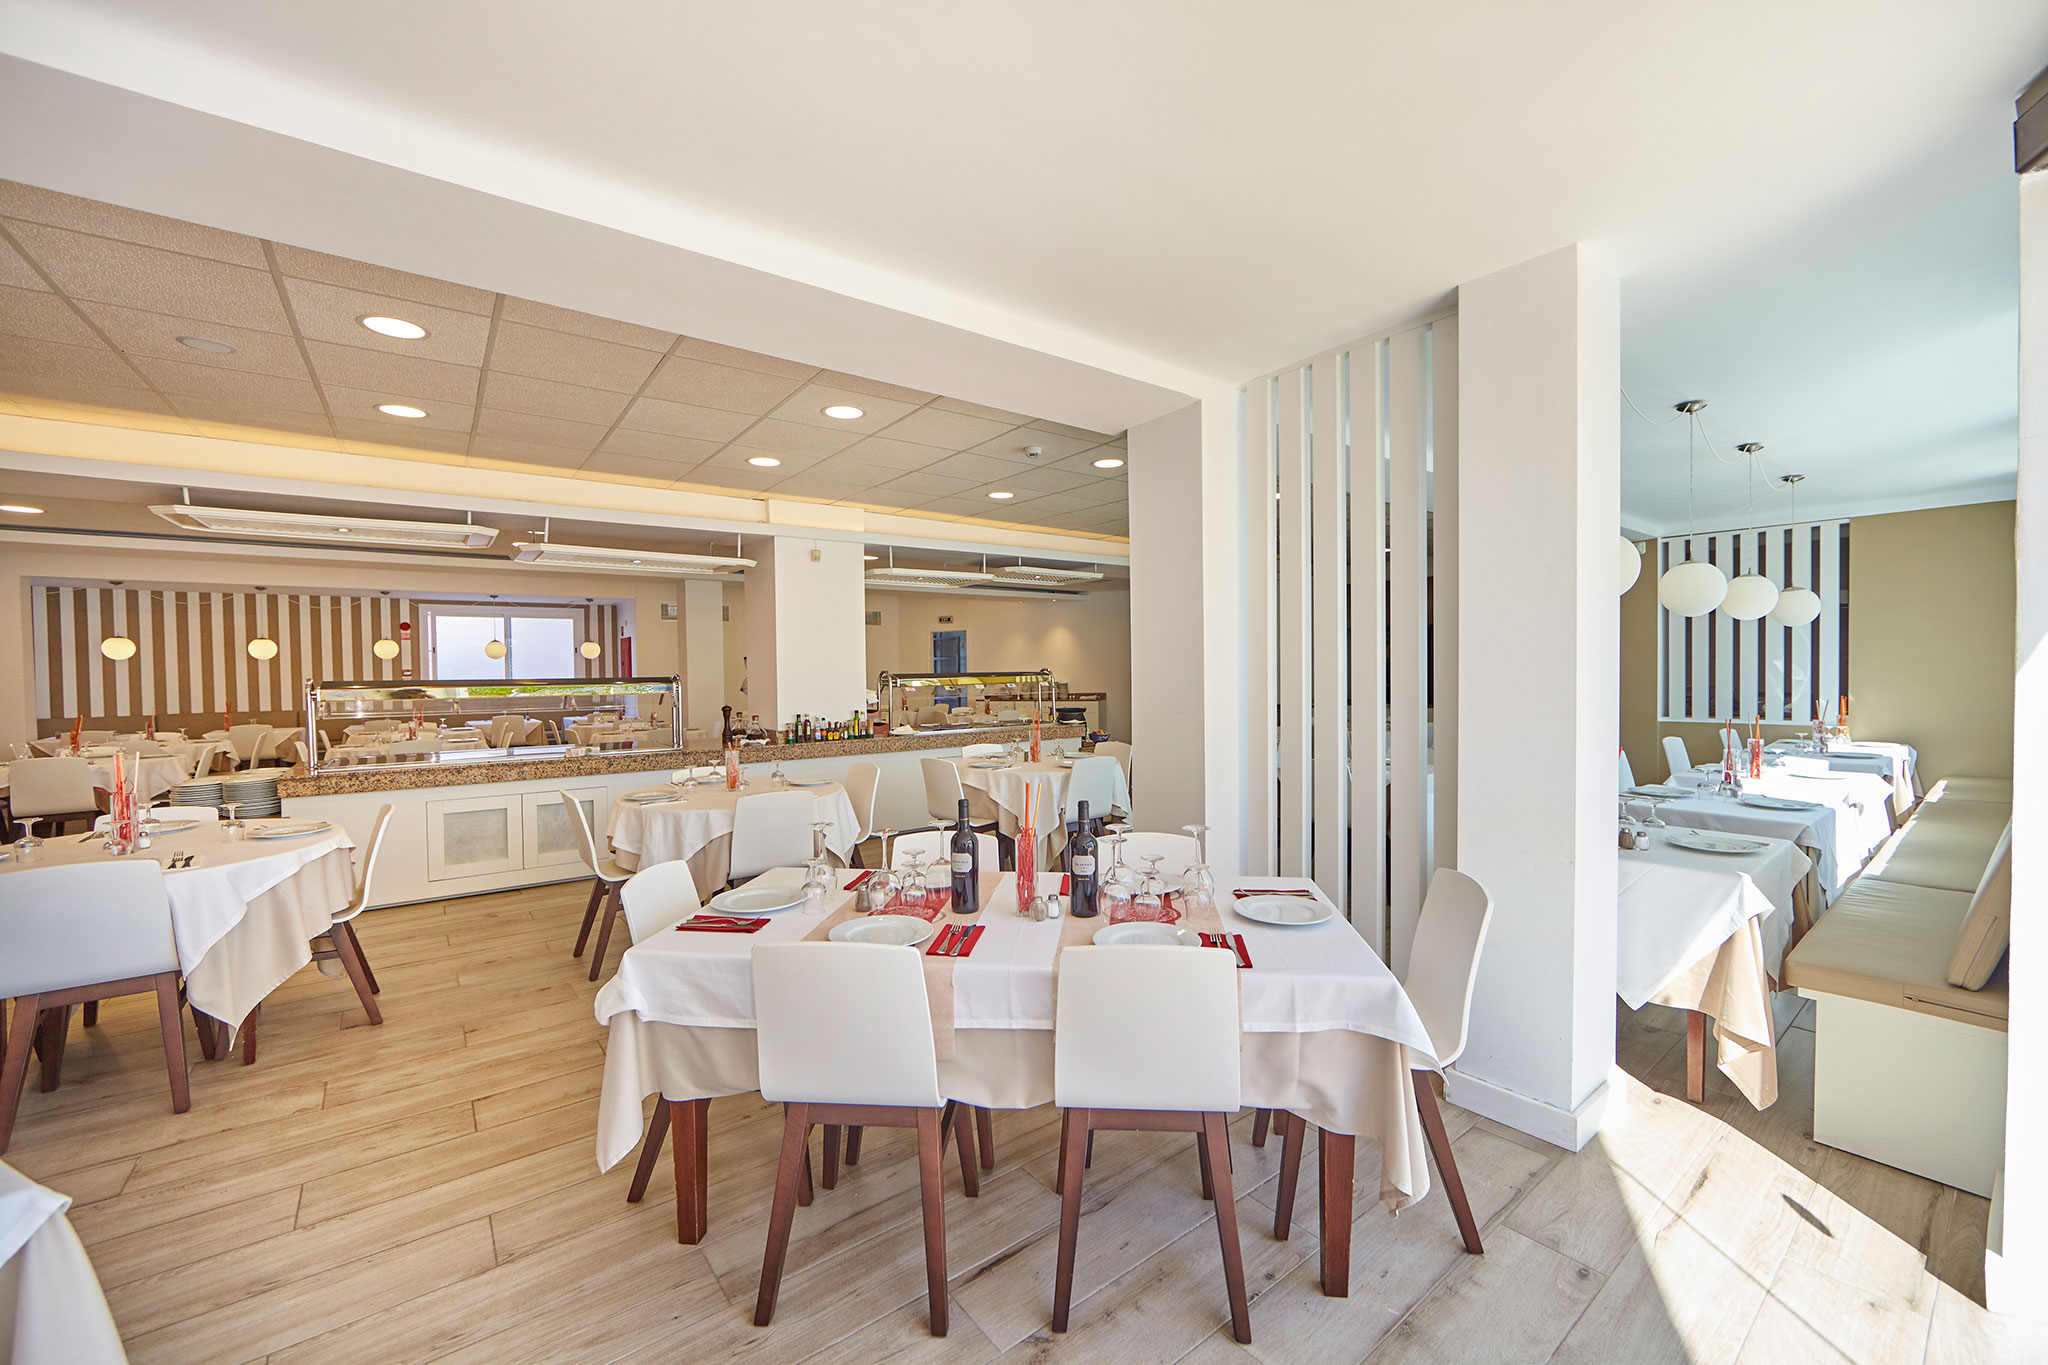 Mediterrane Gastronomie im Restaurant des Hotels principe en playa de palma